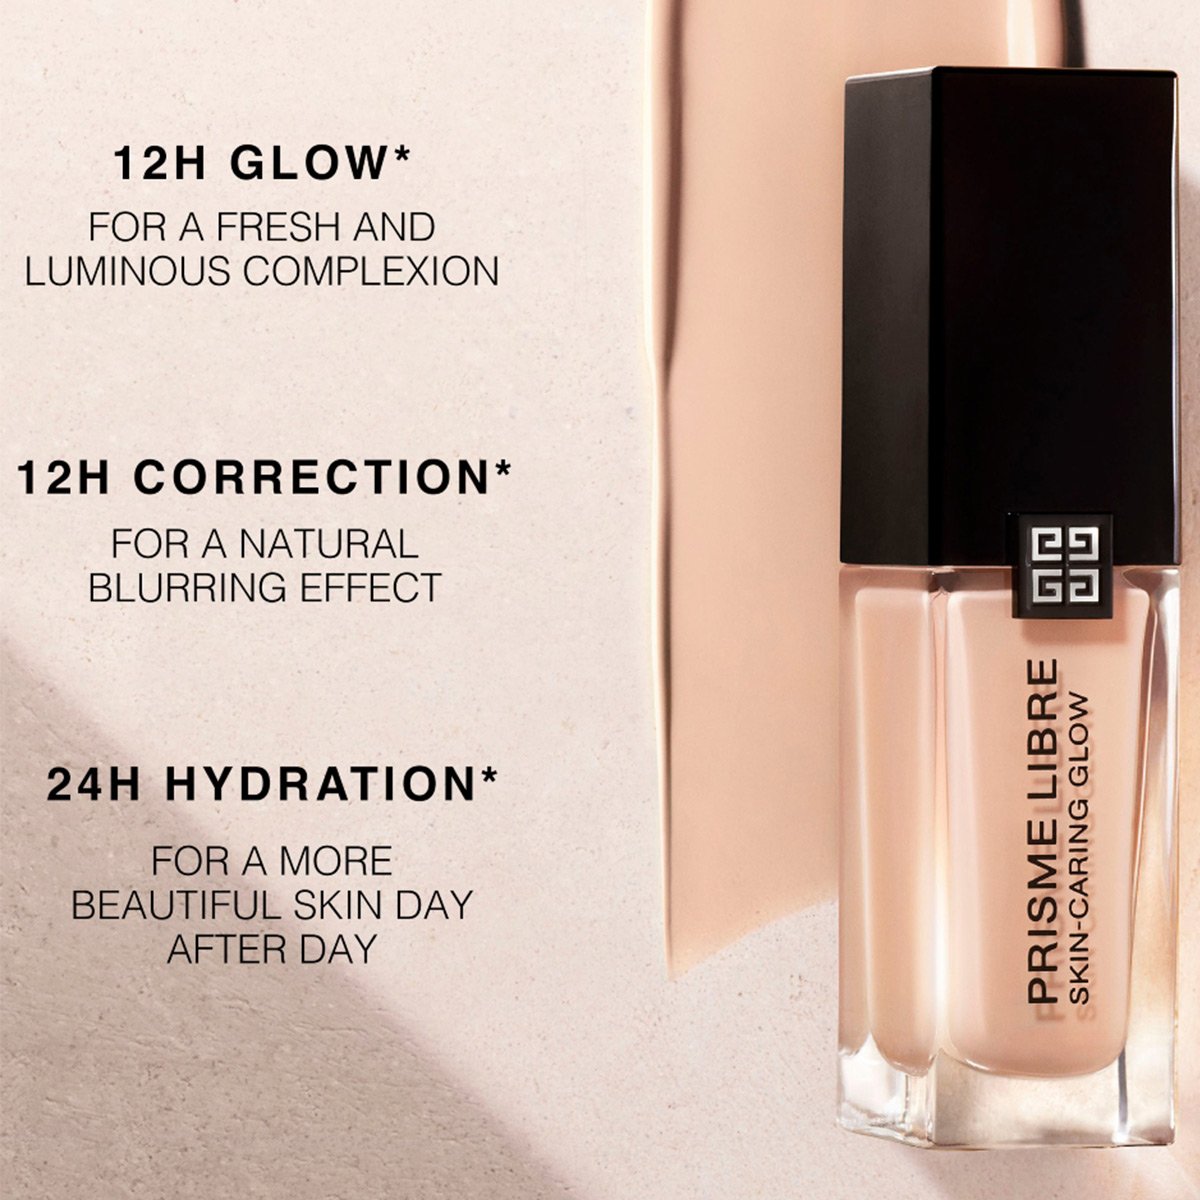 Base de Maquillaje con Tratamiento Givenchy Prisme Libre Skin-Caring Glow, 30 Ml Tono 4-W280